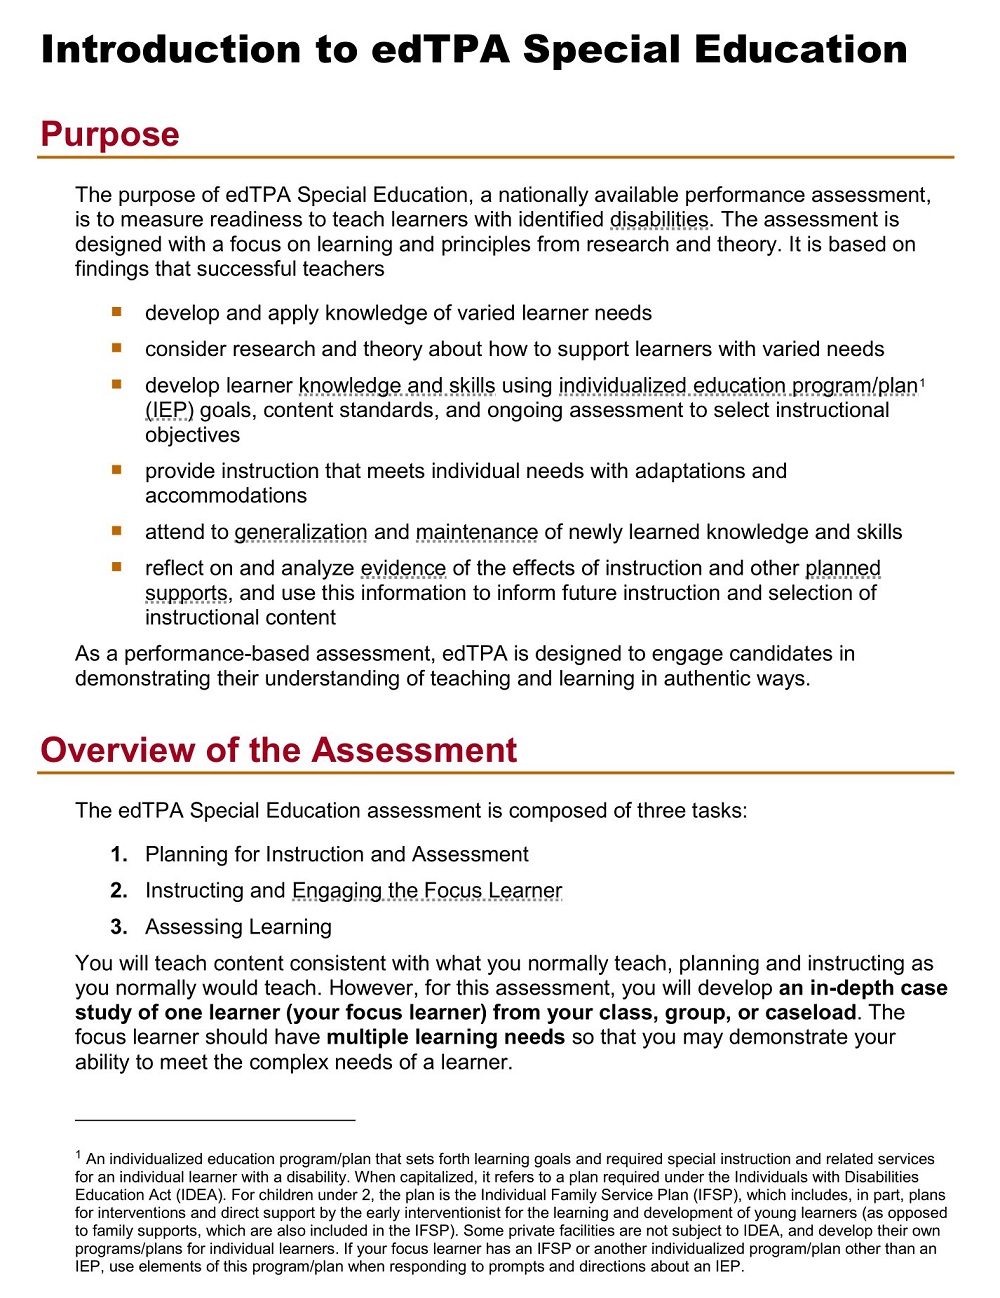 edTPA Special Education Tasks Analysis